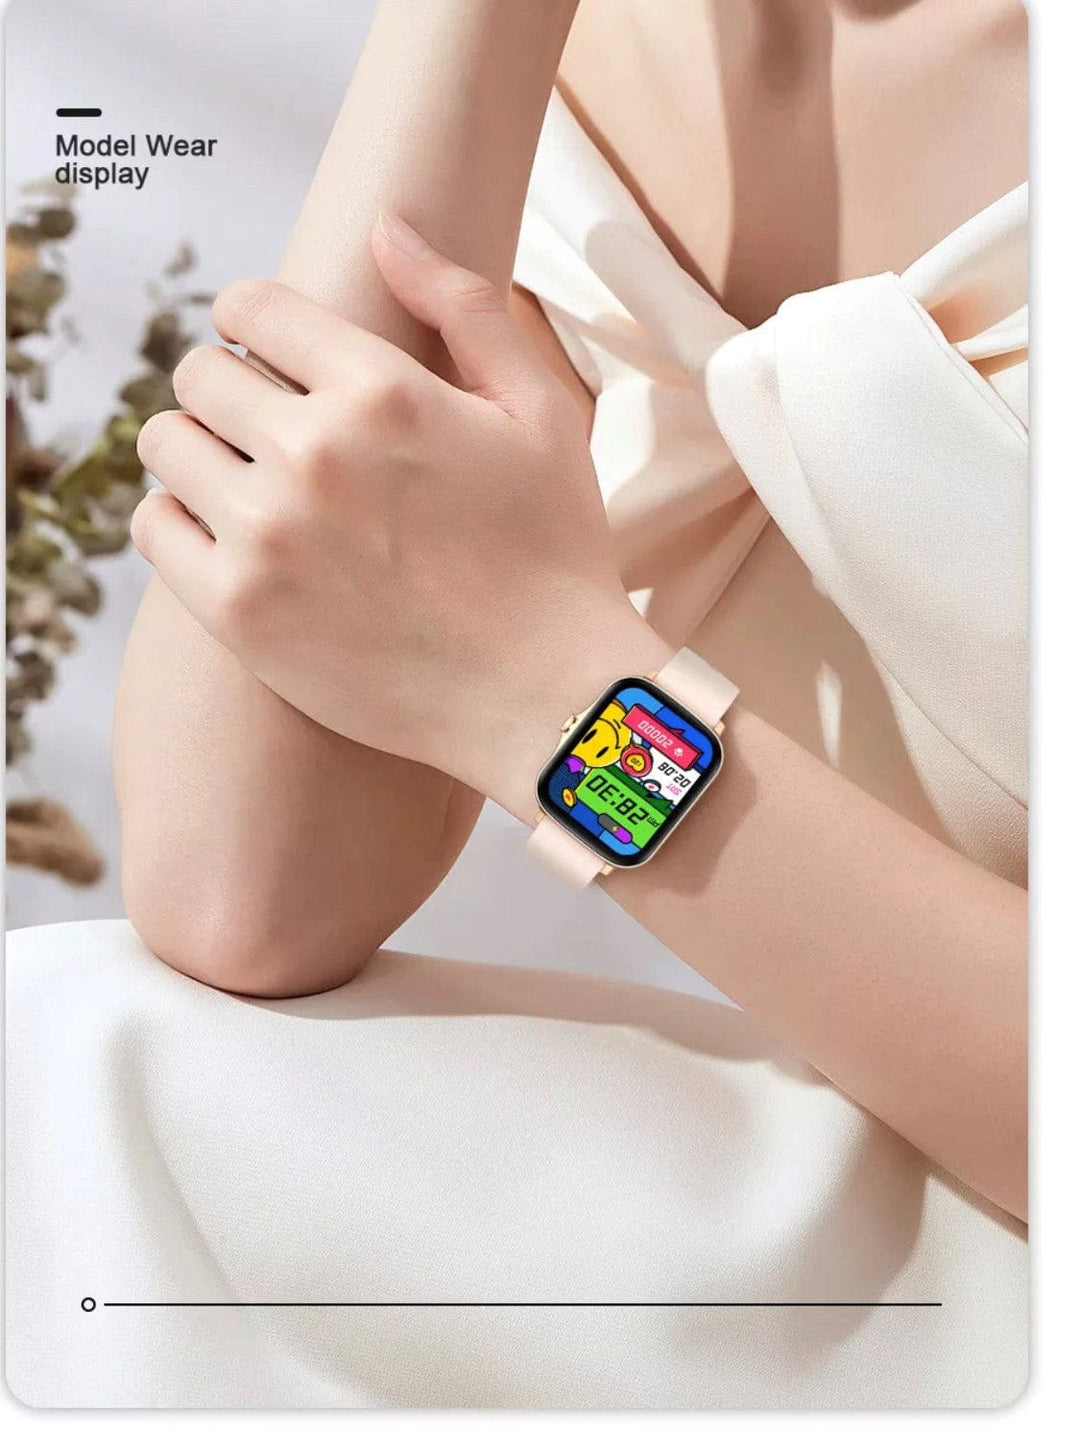 Smartoby P8 Max Light Gray Smart Watch with BT Call - Smart Watch SA